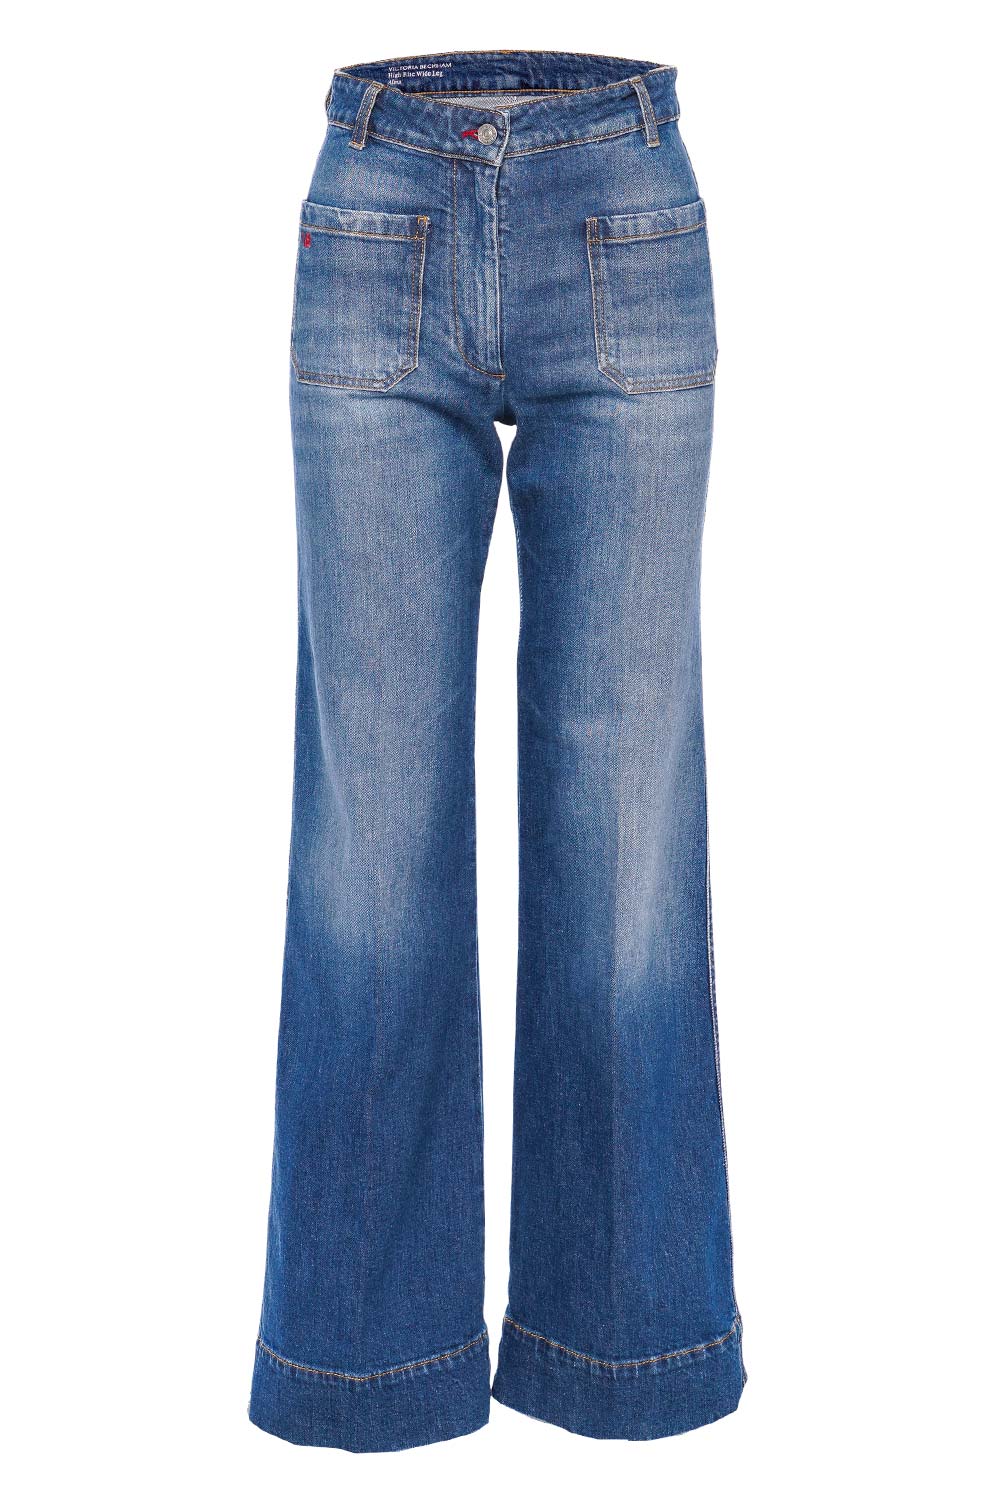 Victoria Beckham Alina High Waisted Patch Pocket Jeans